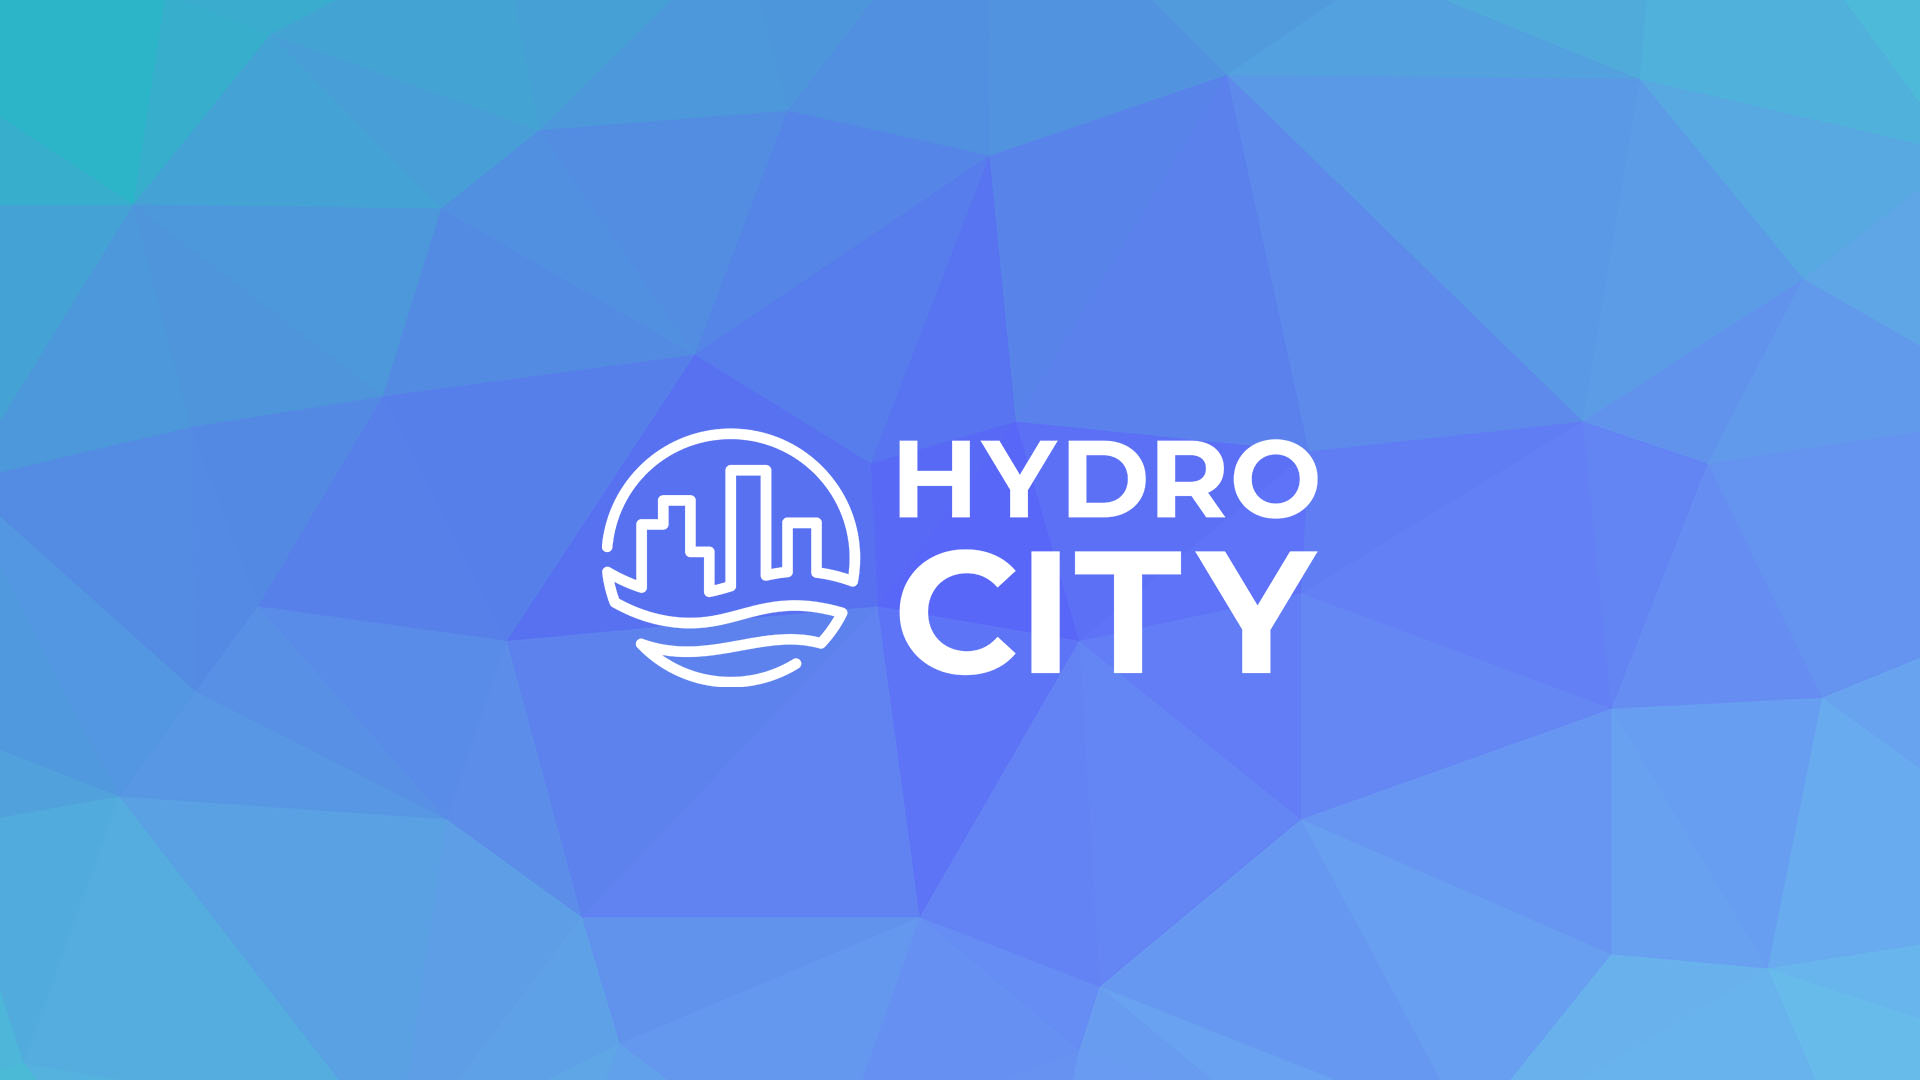 Hydro City | Motion Design Capstone 2020